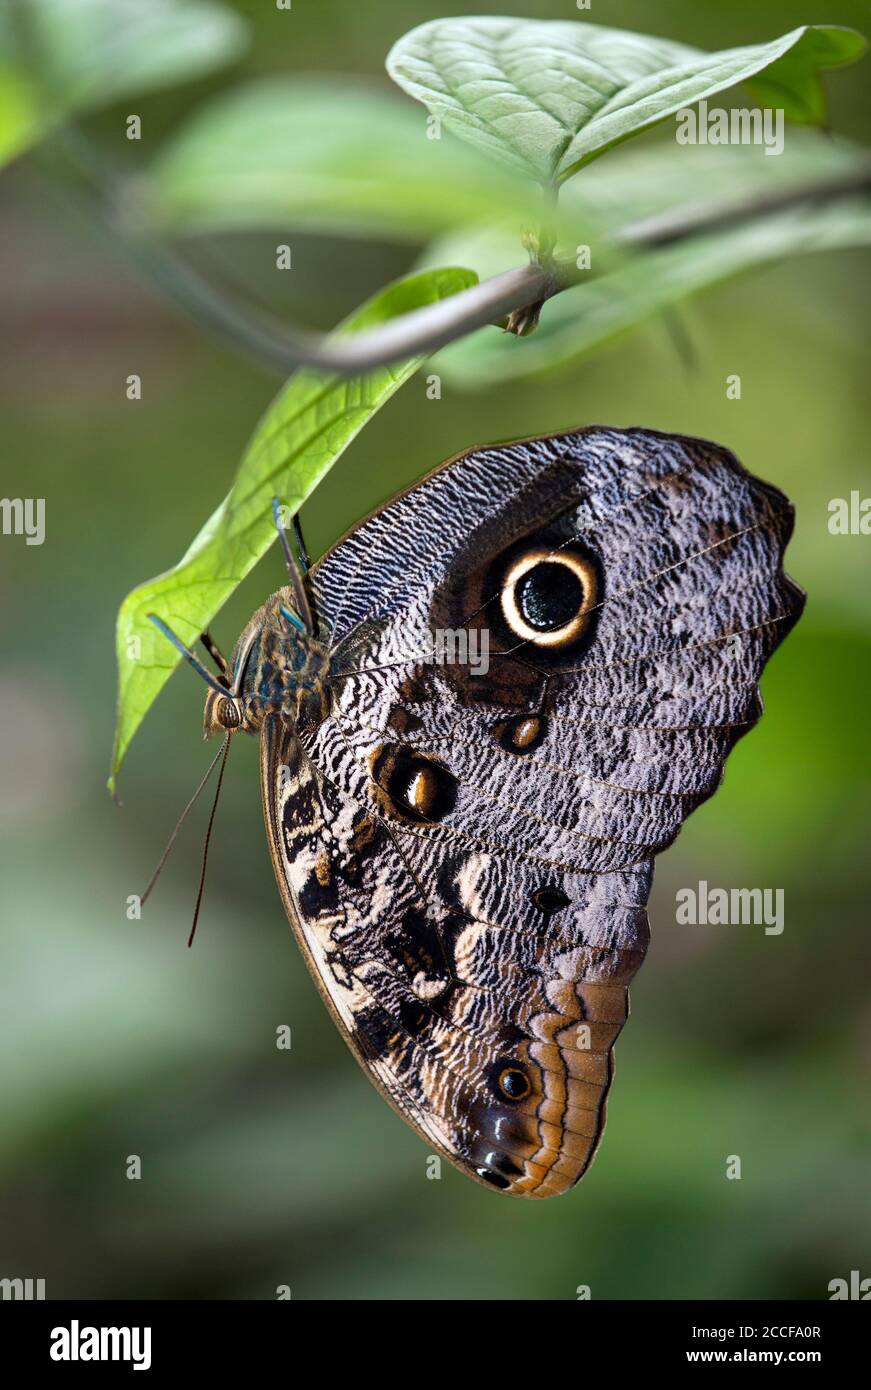 Banana butterfly (Caligo sp.), Family of noble butterflies (Nymphalidae), Mindo region, Ecuador Stock Photo